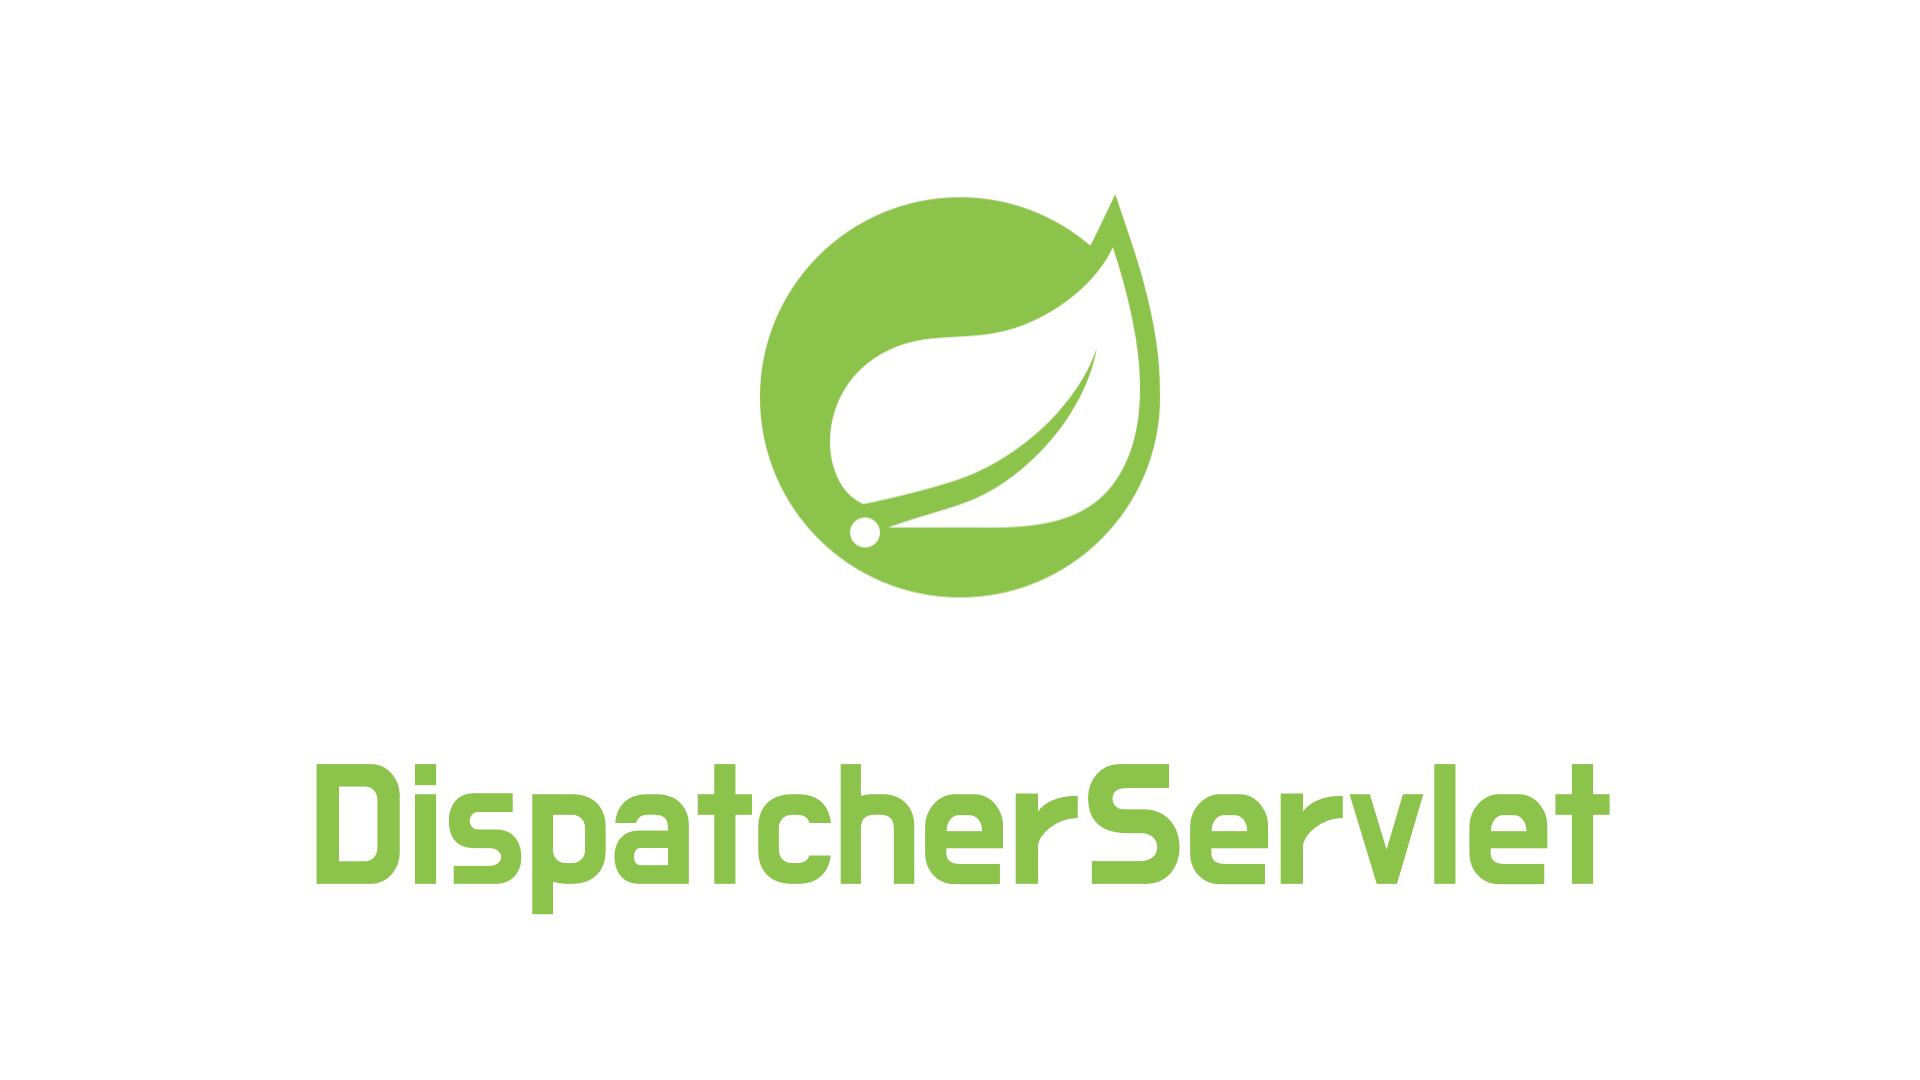 DispatcherServlet - Part 1